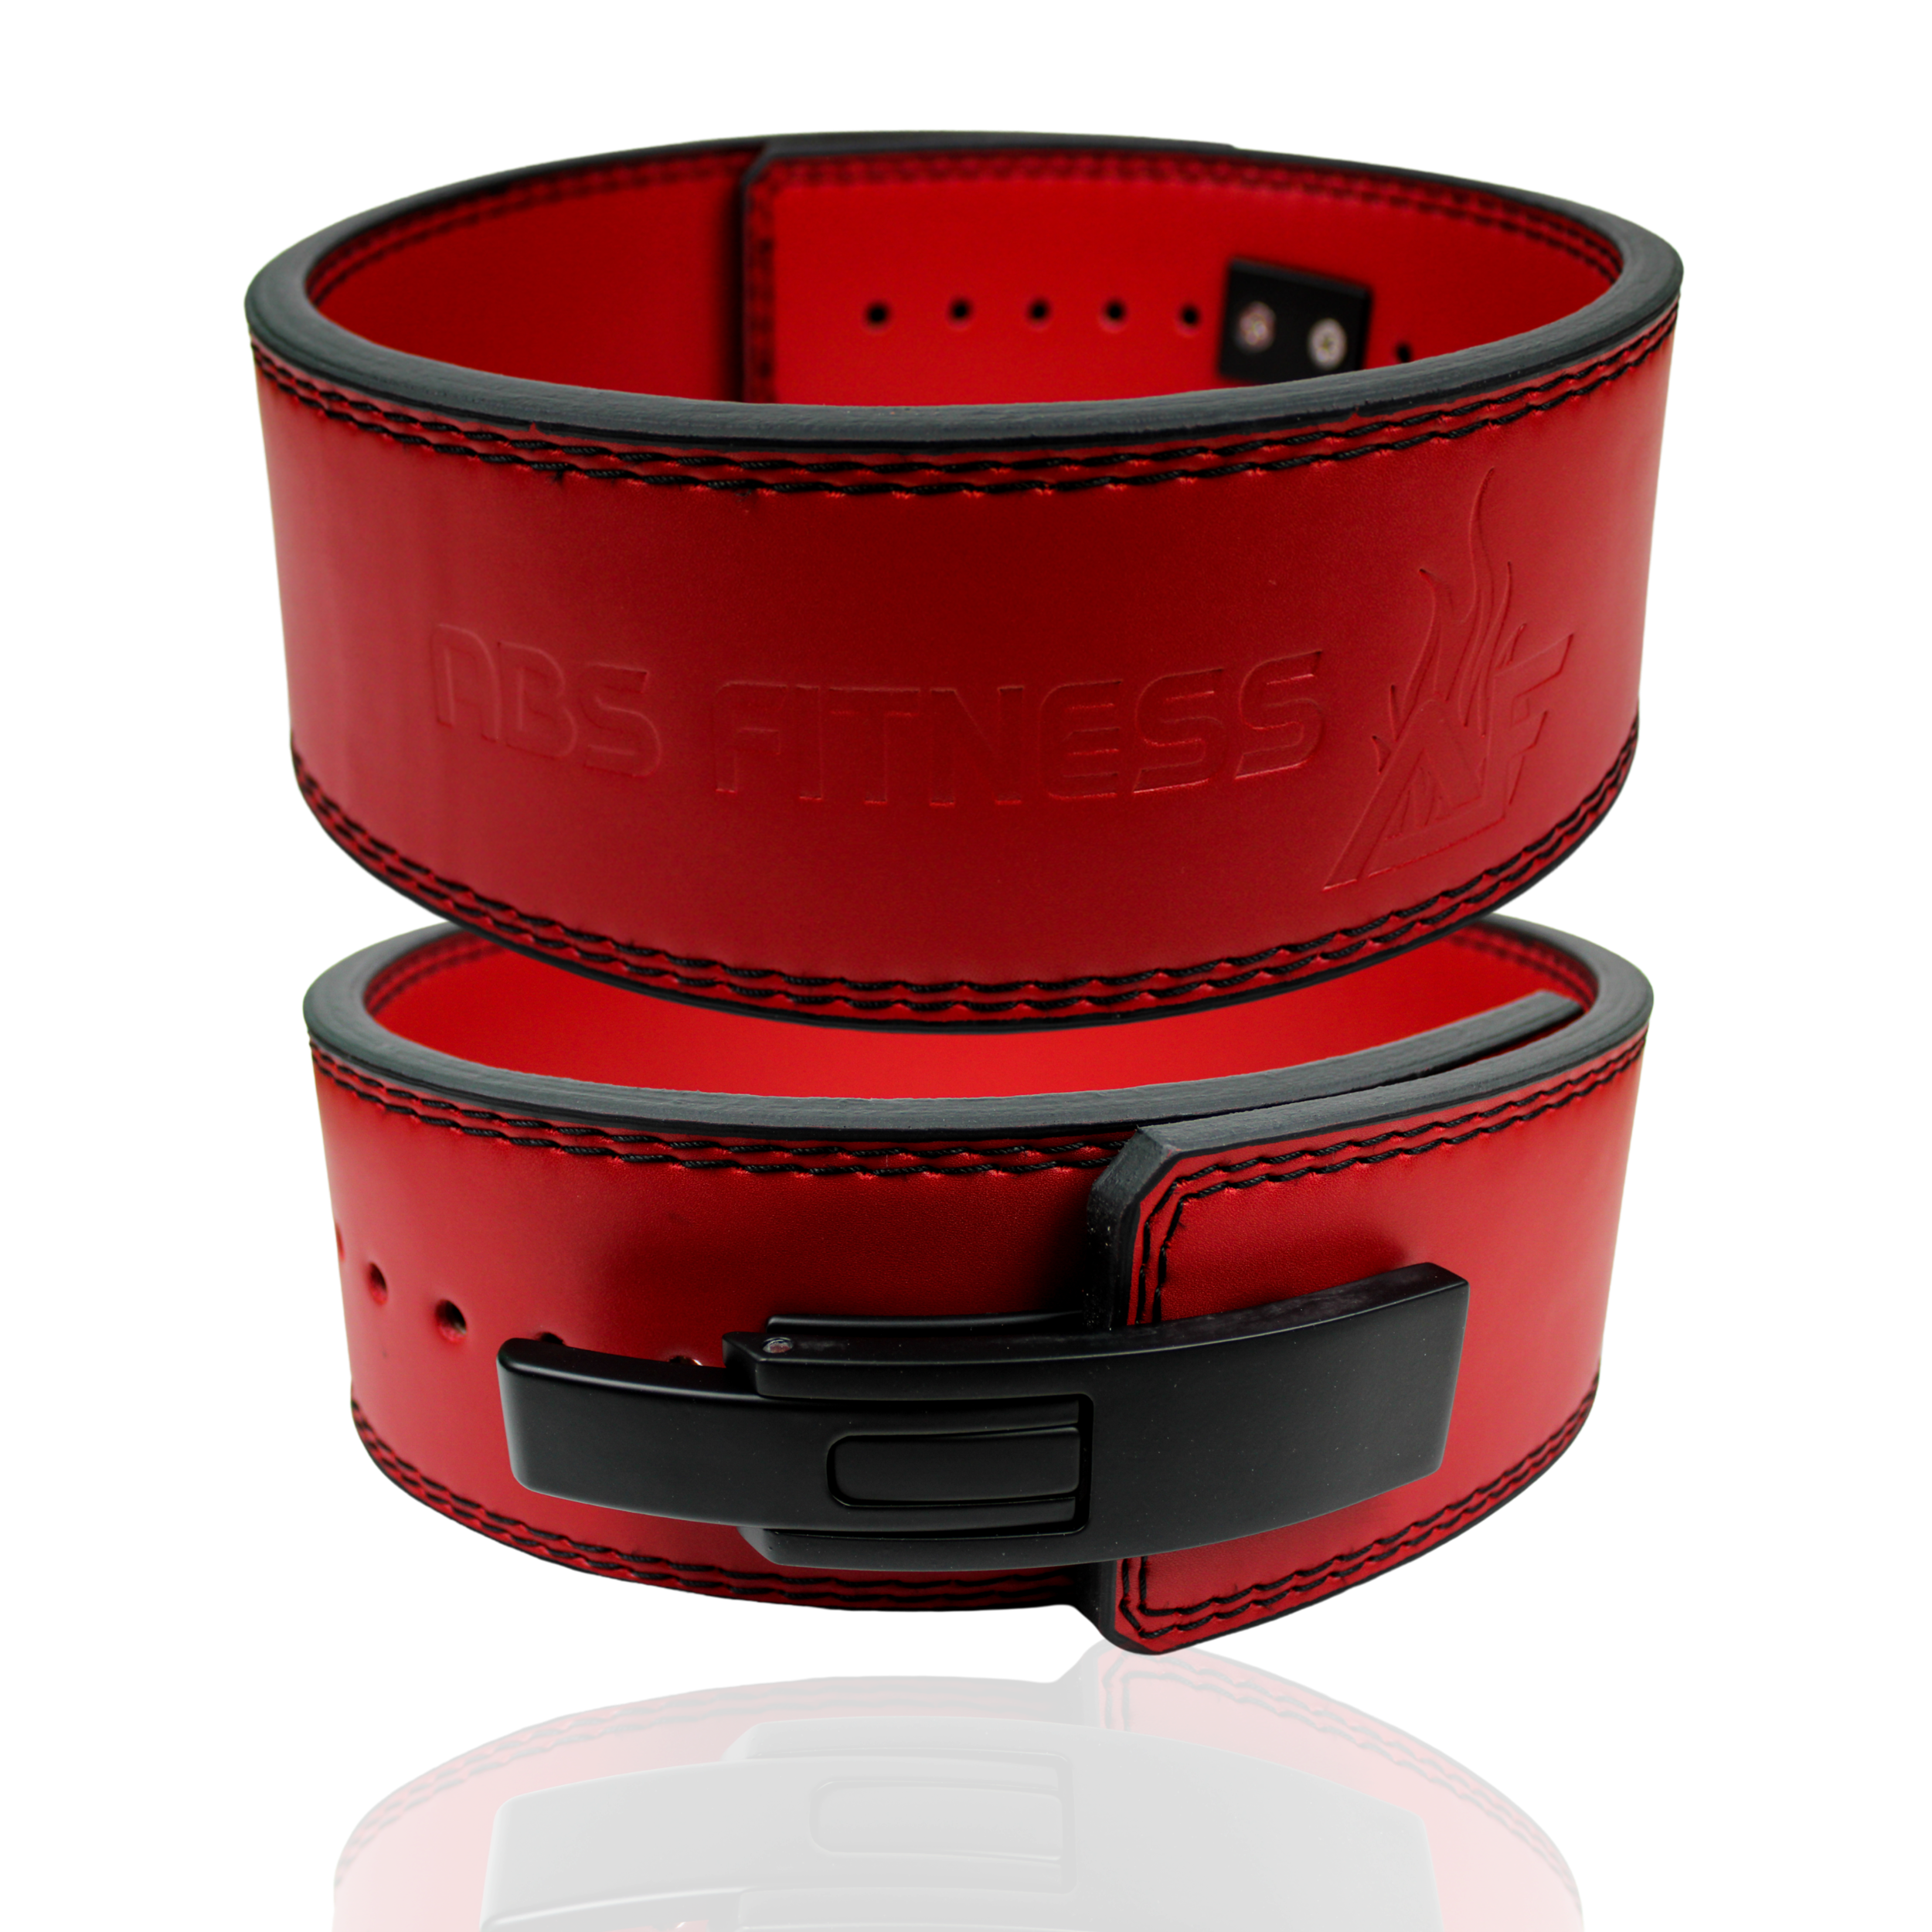 Barbelts cinturón de palanca - true red 10mm